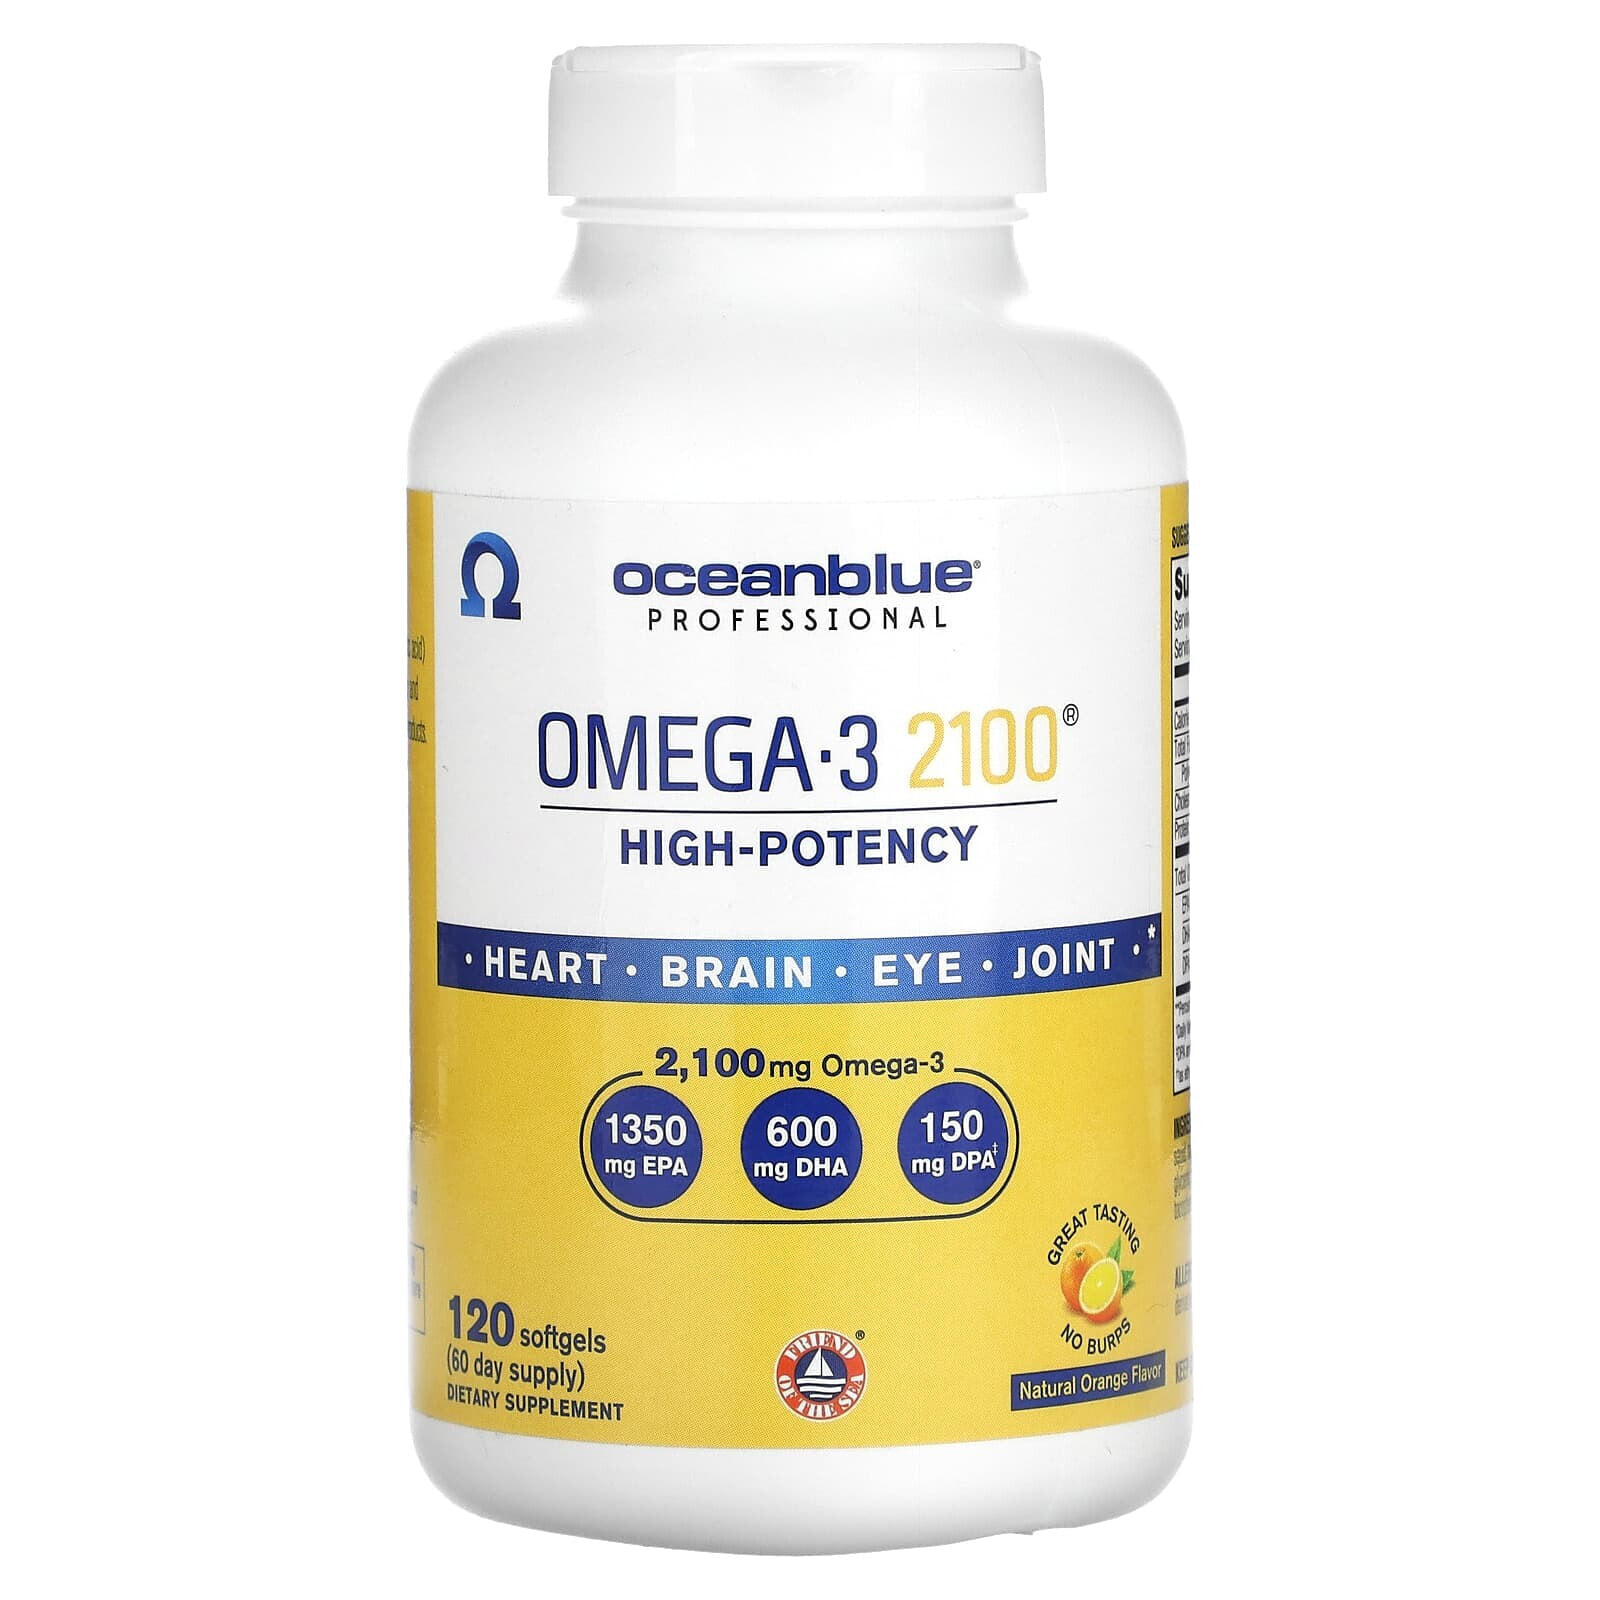 Professional, Omega-3 2100, High Potency, Natural Orange, 2,100 mg, 120 Softgels